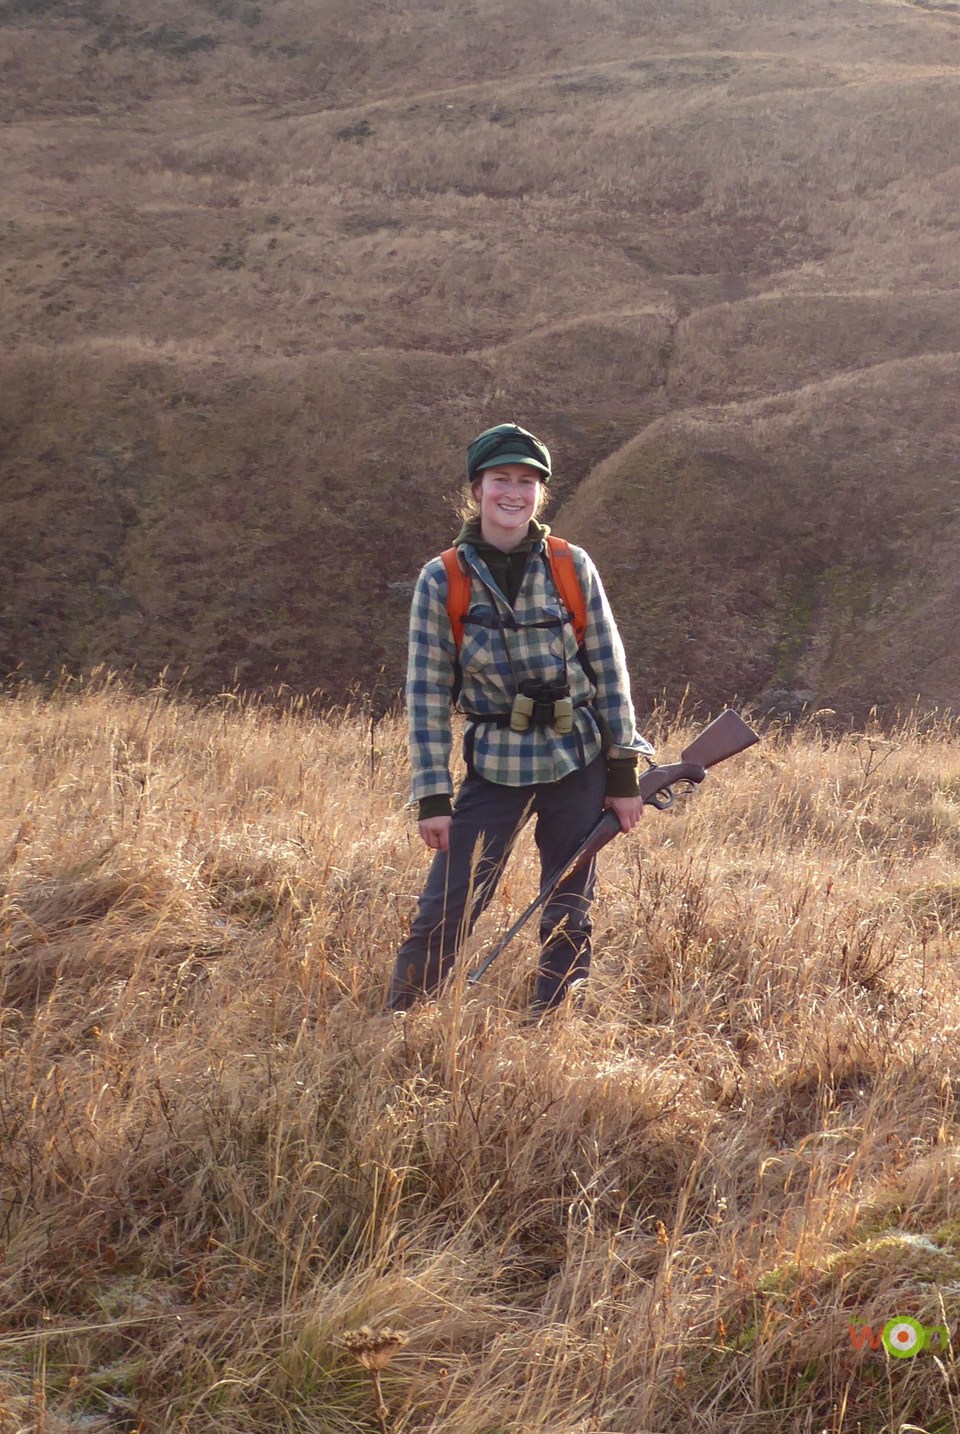 Tia taking time to hunt in Kodiak for herself after a long season of guiding. Tia Shoemaker